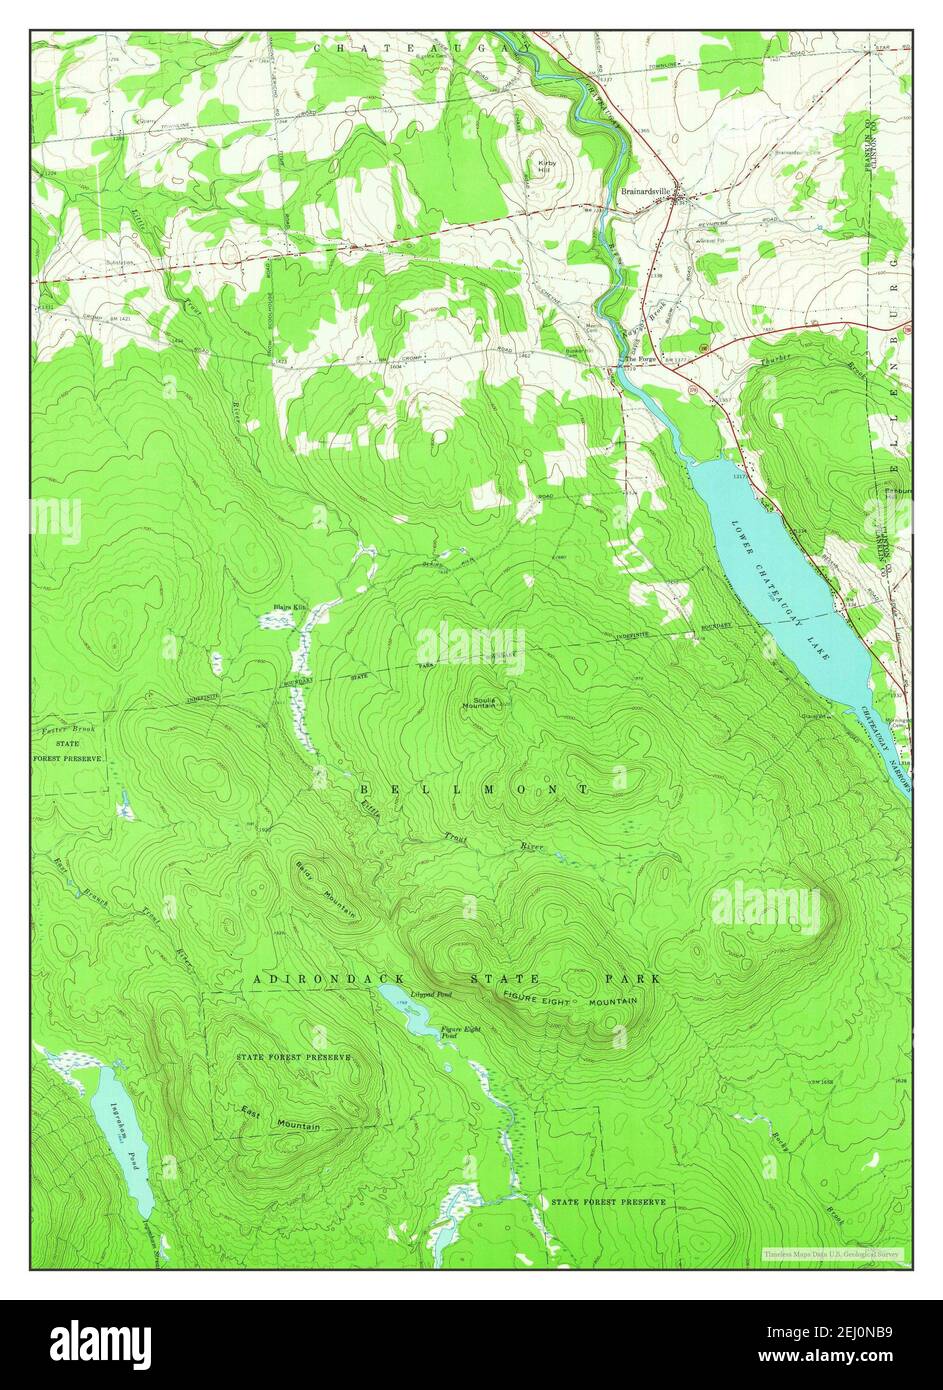 Brainardsville, New York, map 1964, 1:24000, United States of America by Timeless Maps, data U.S. Geological Survey Stock Photo